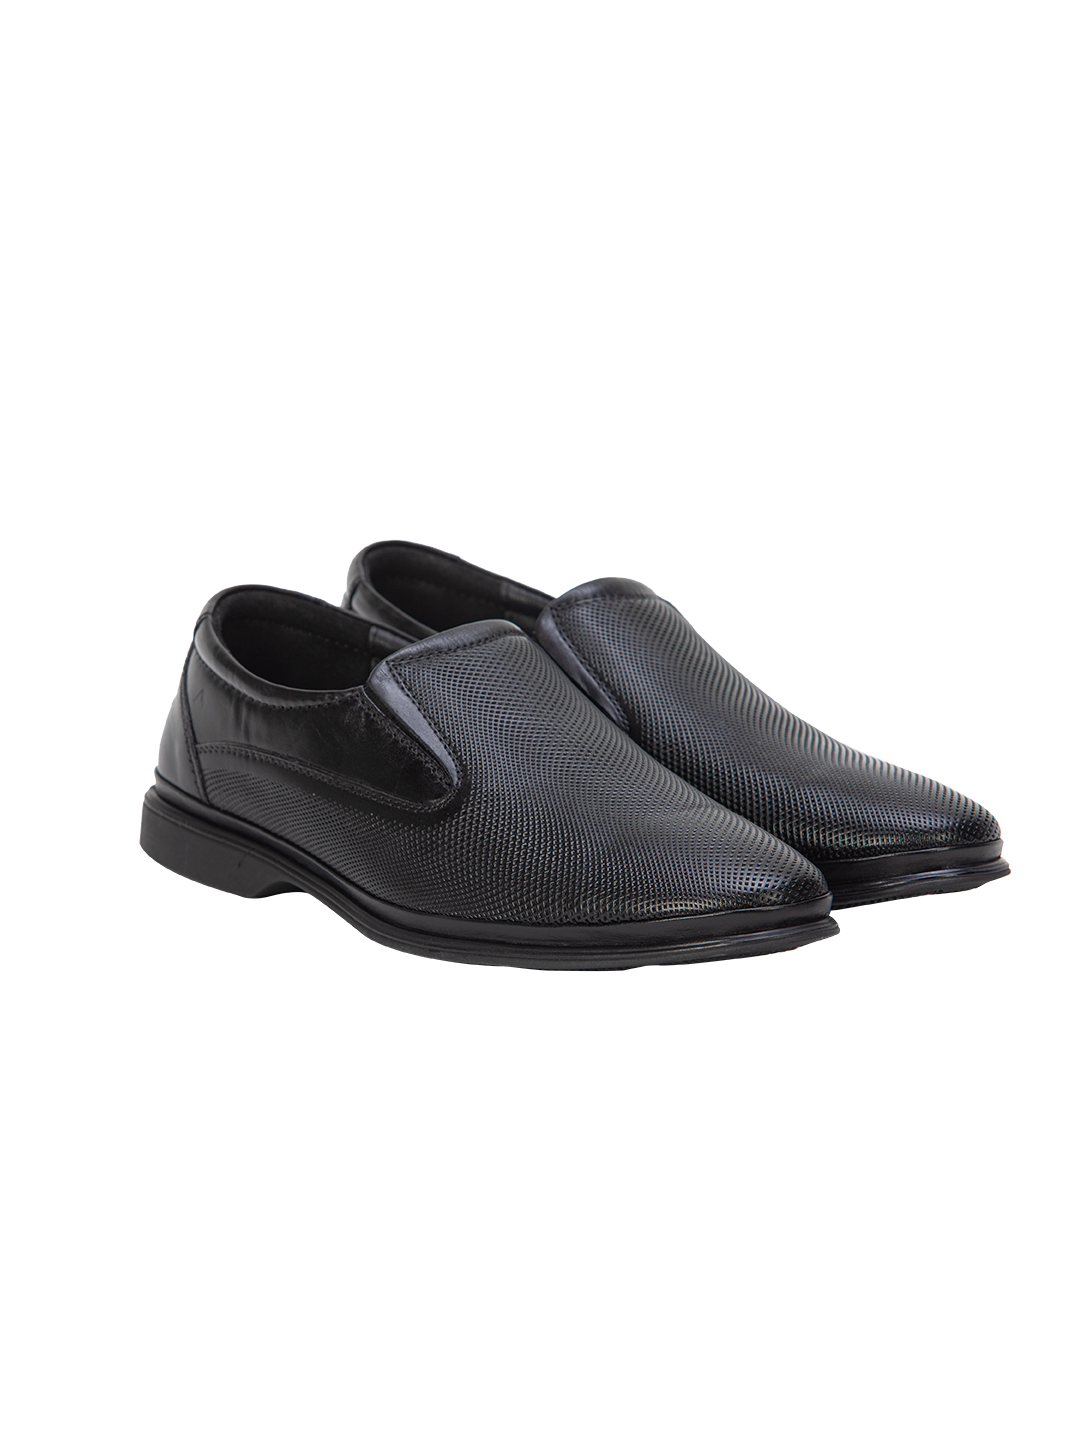 Buy Von Wellx Germany Comfort Mondaine Casual Black Shoes Online in West Bengal